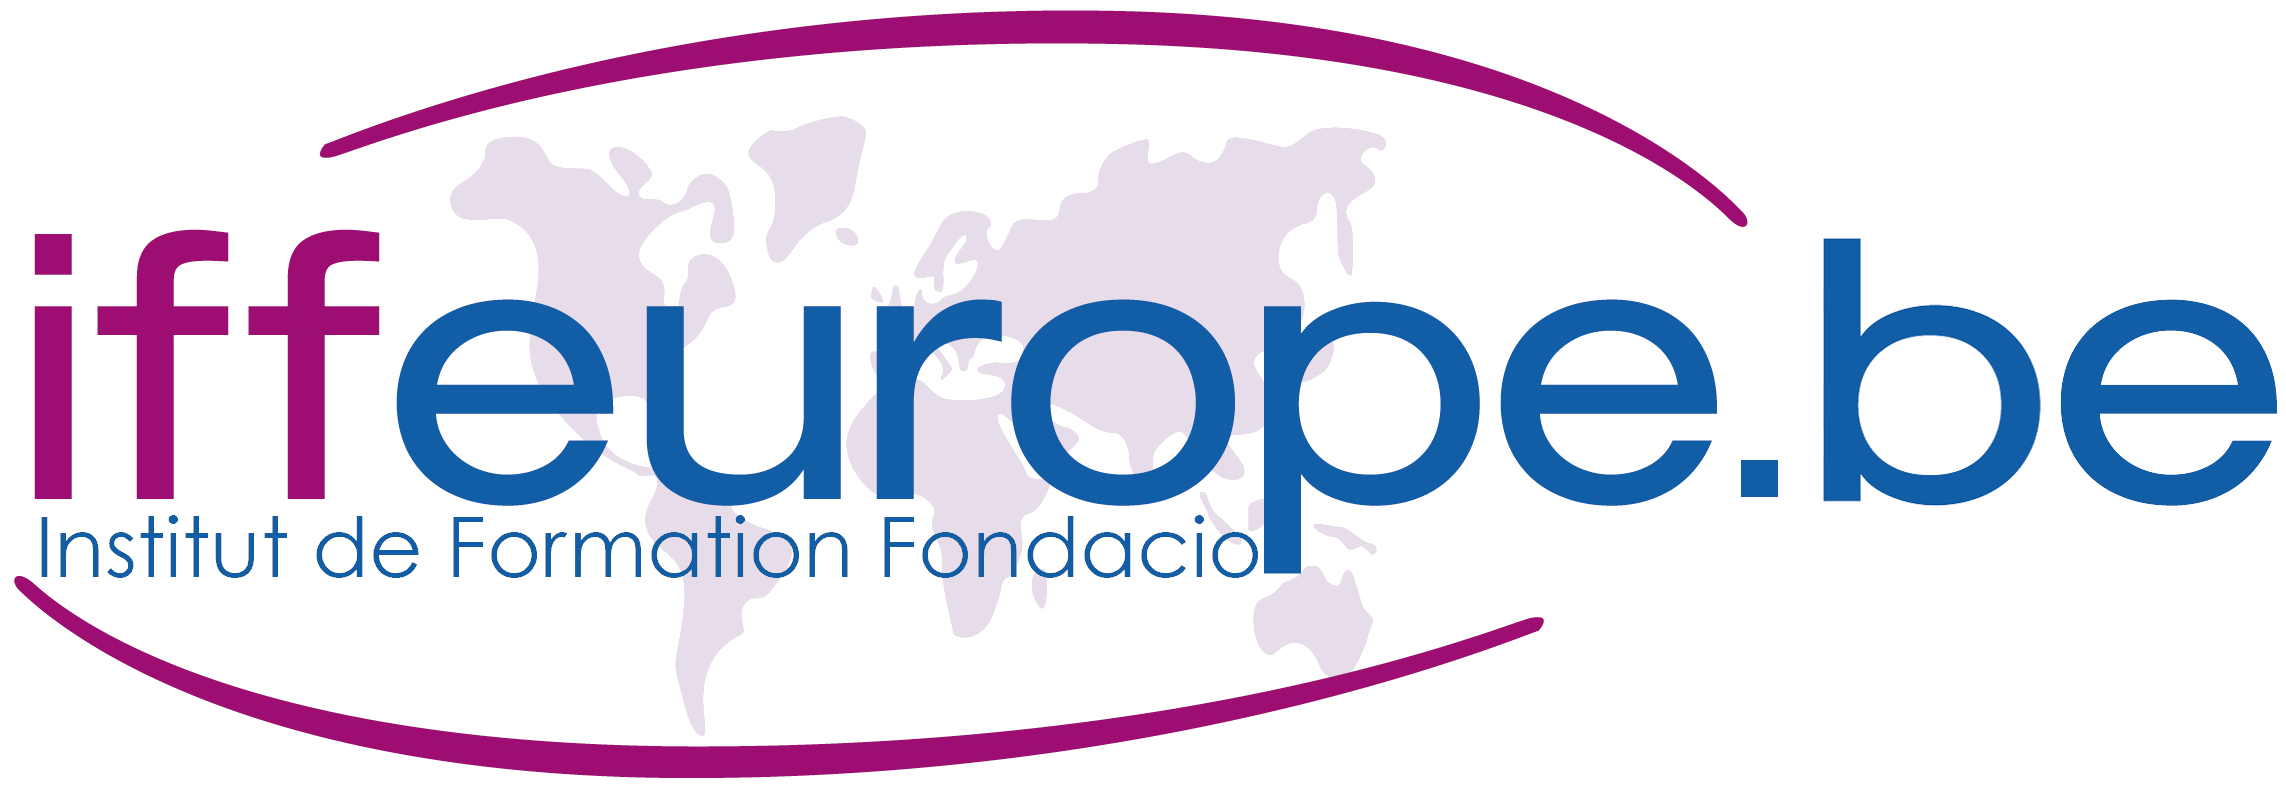 IFF Europe logo